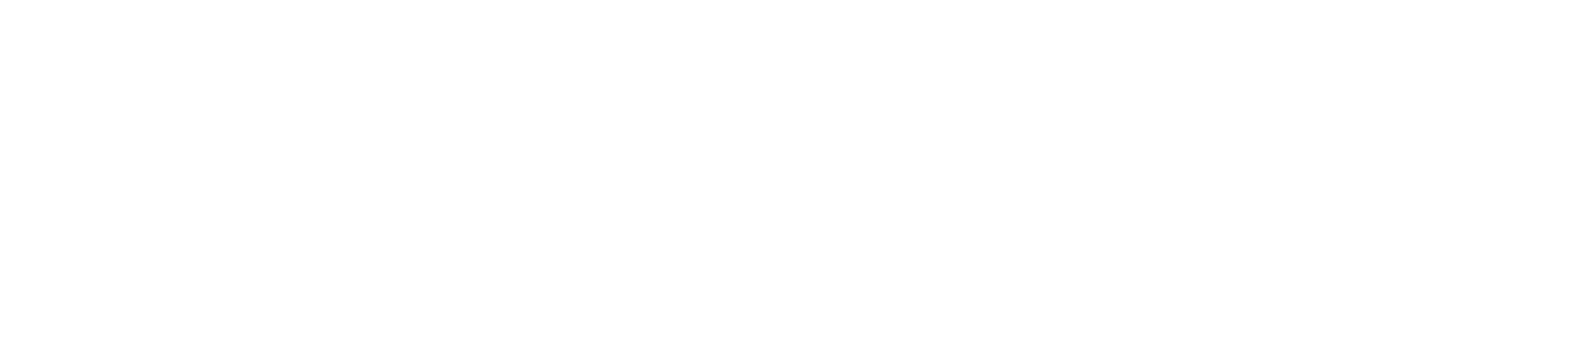 Ingersoll Rand logo large for dark backgrounds (transparent PNG)